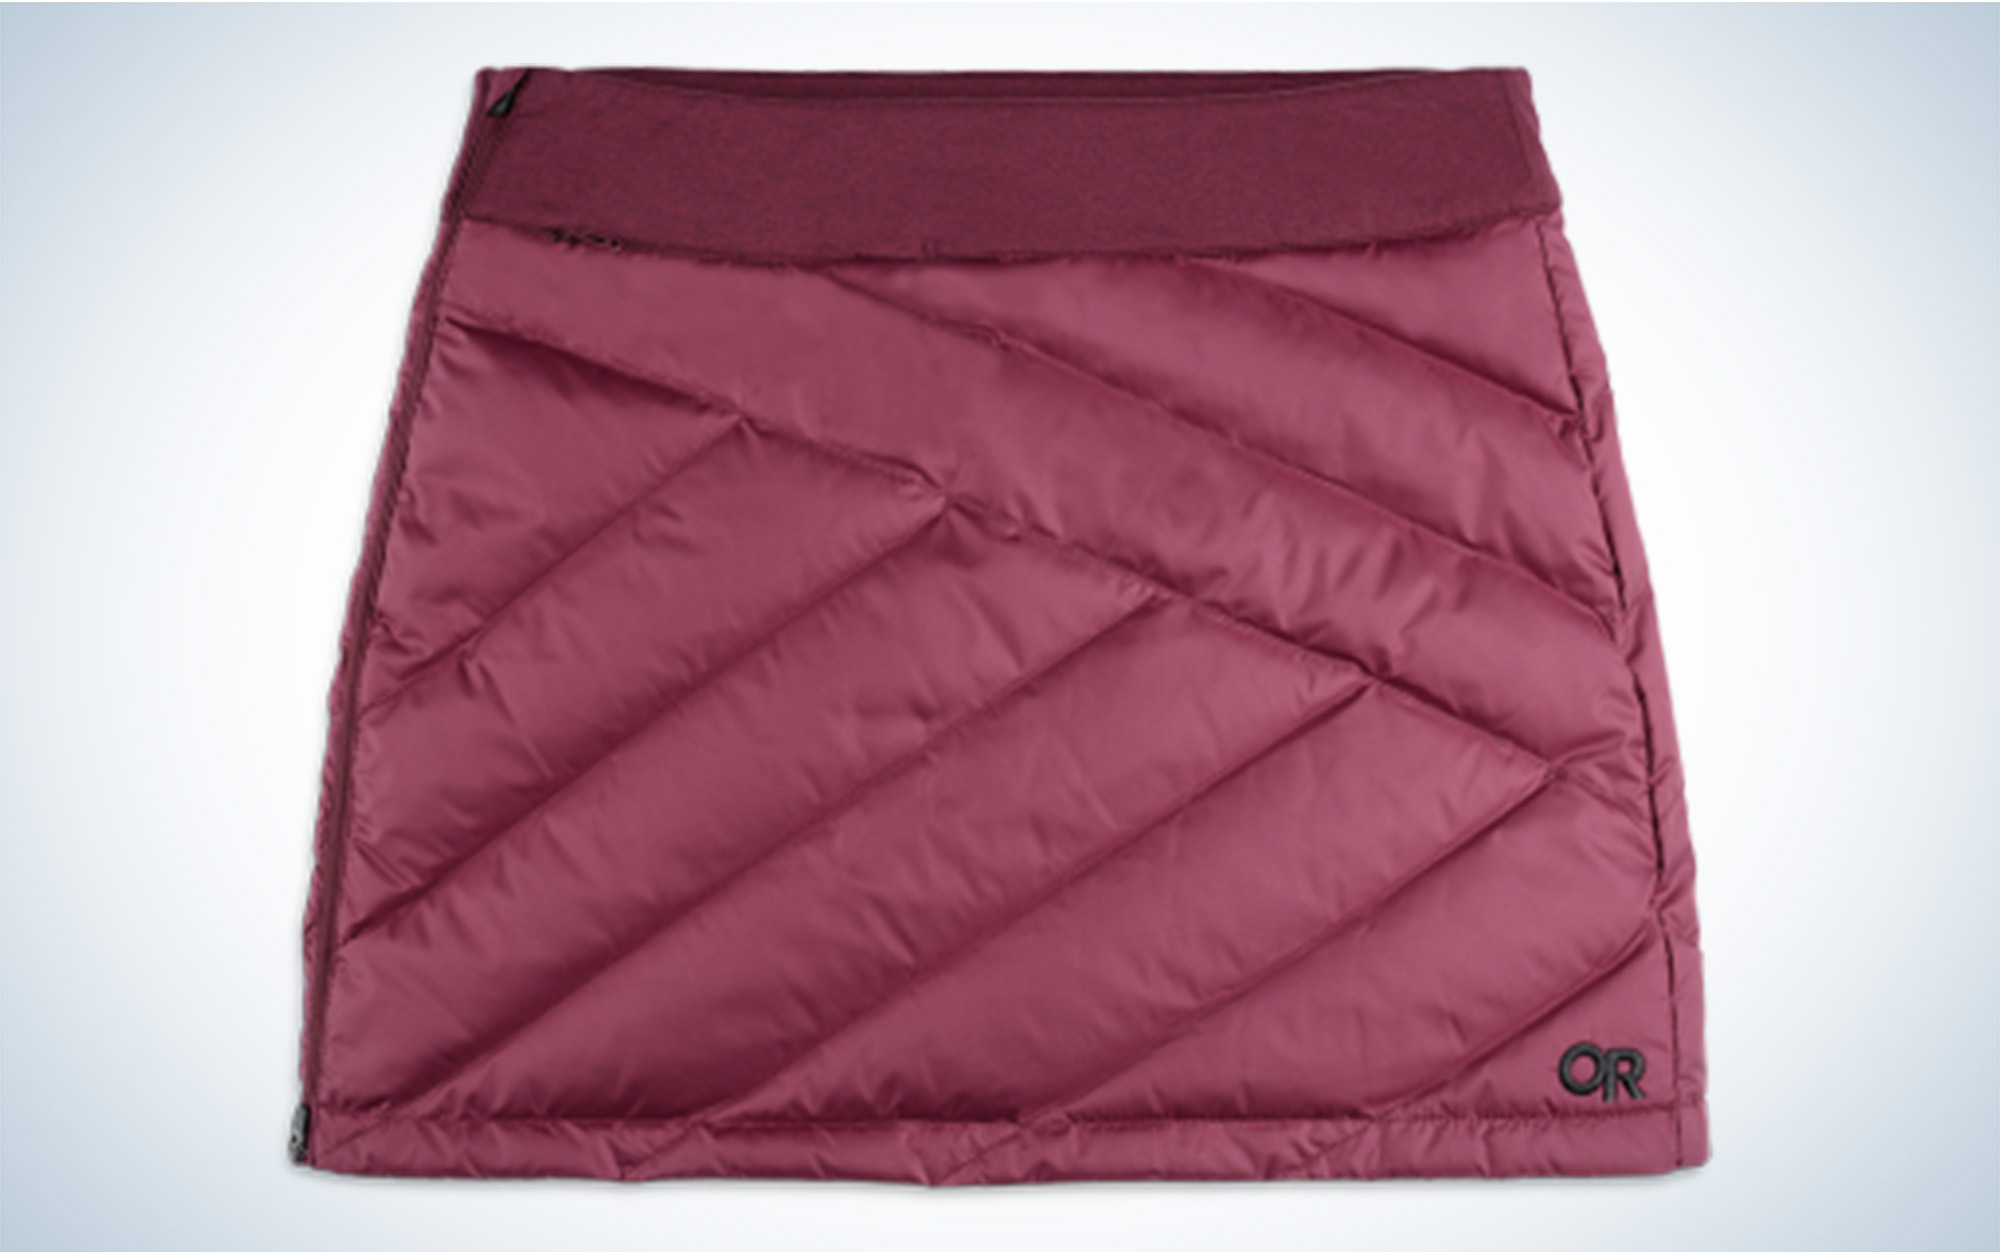  Cirrus Skirt Women's, deep heather - Insulated skirt - RAB  - 88.42 € - outdoorové oblečení a vybavení shop